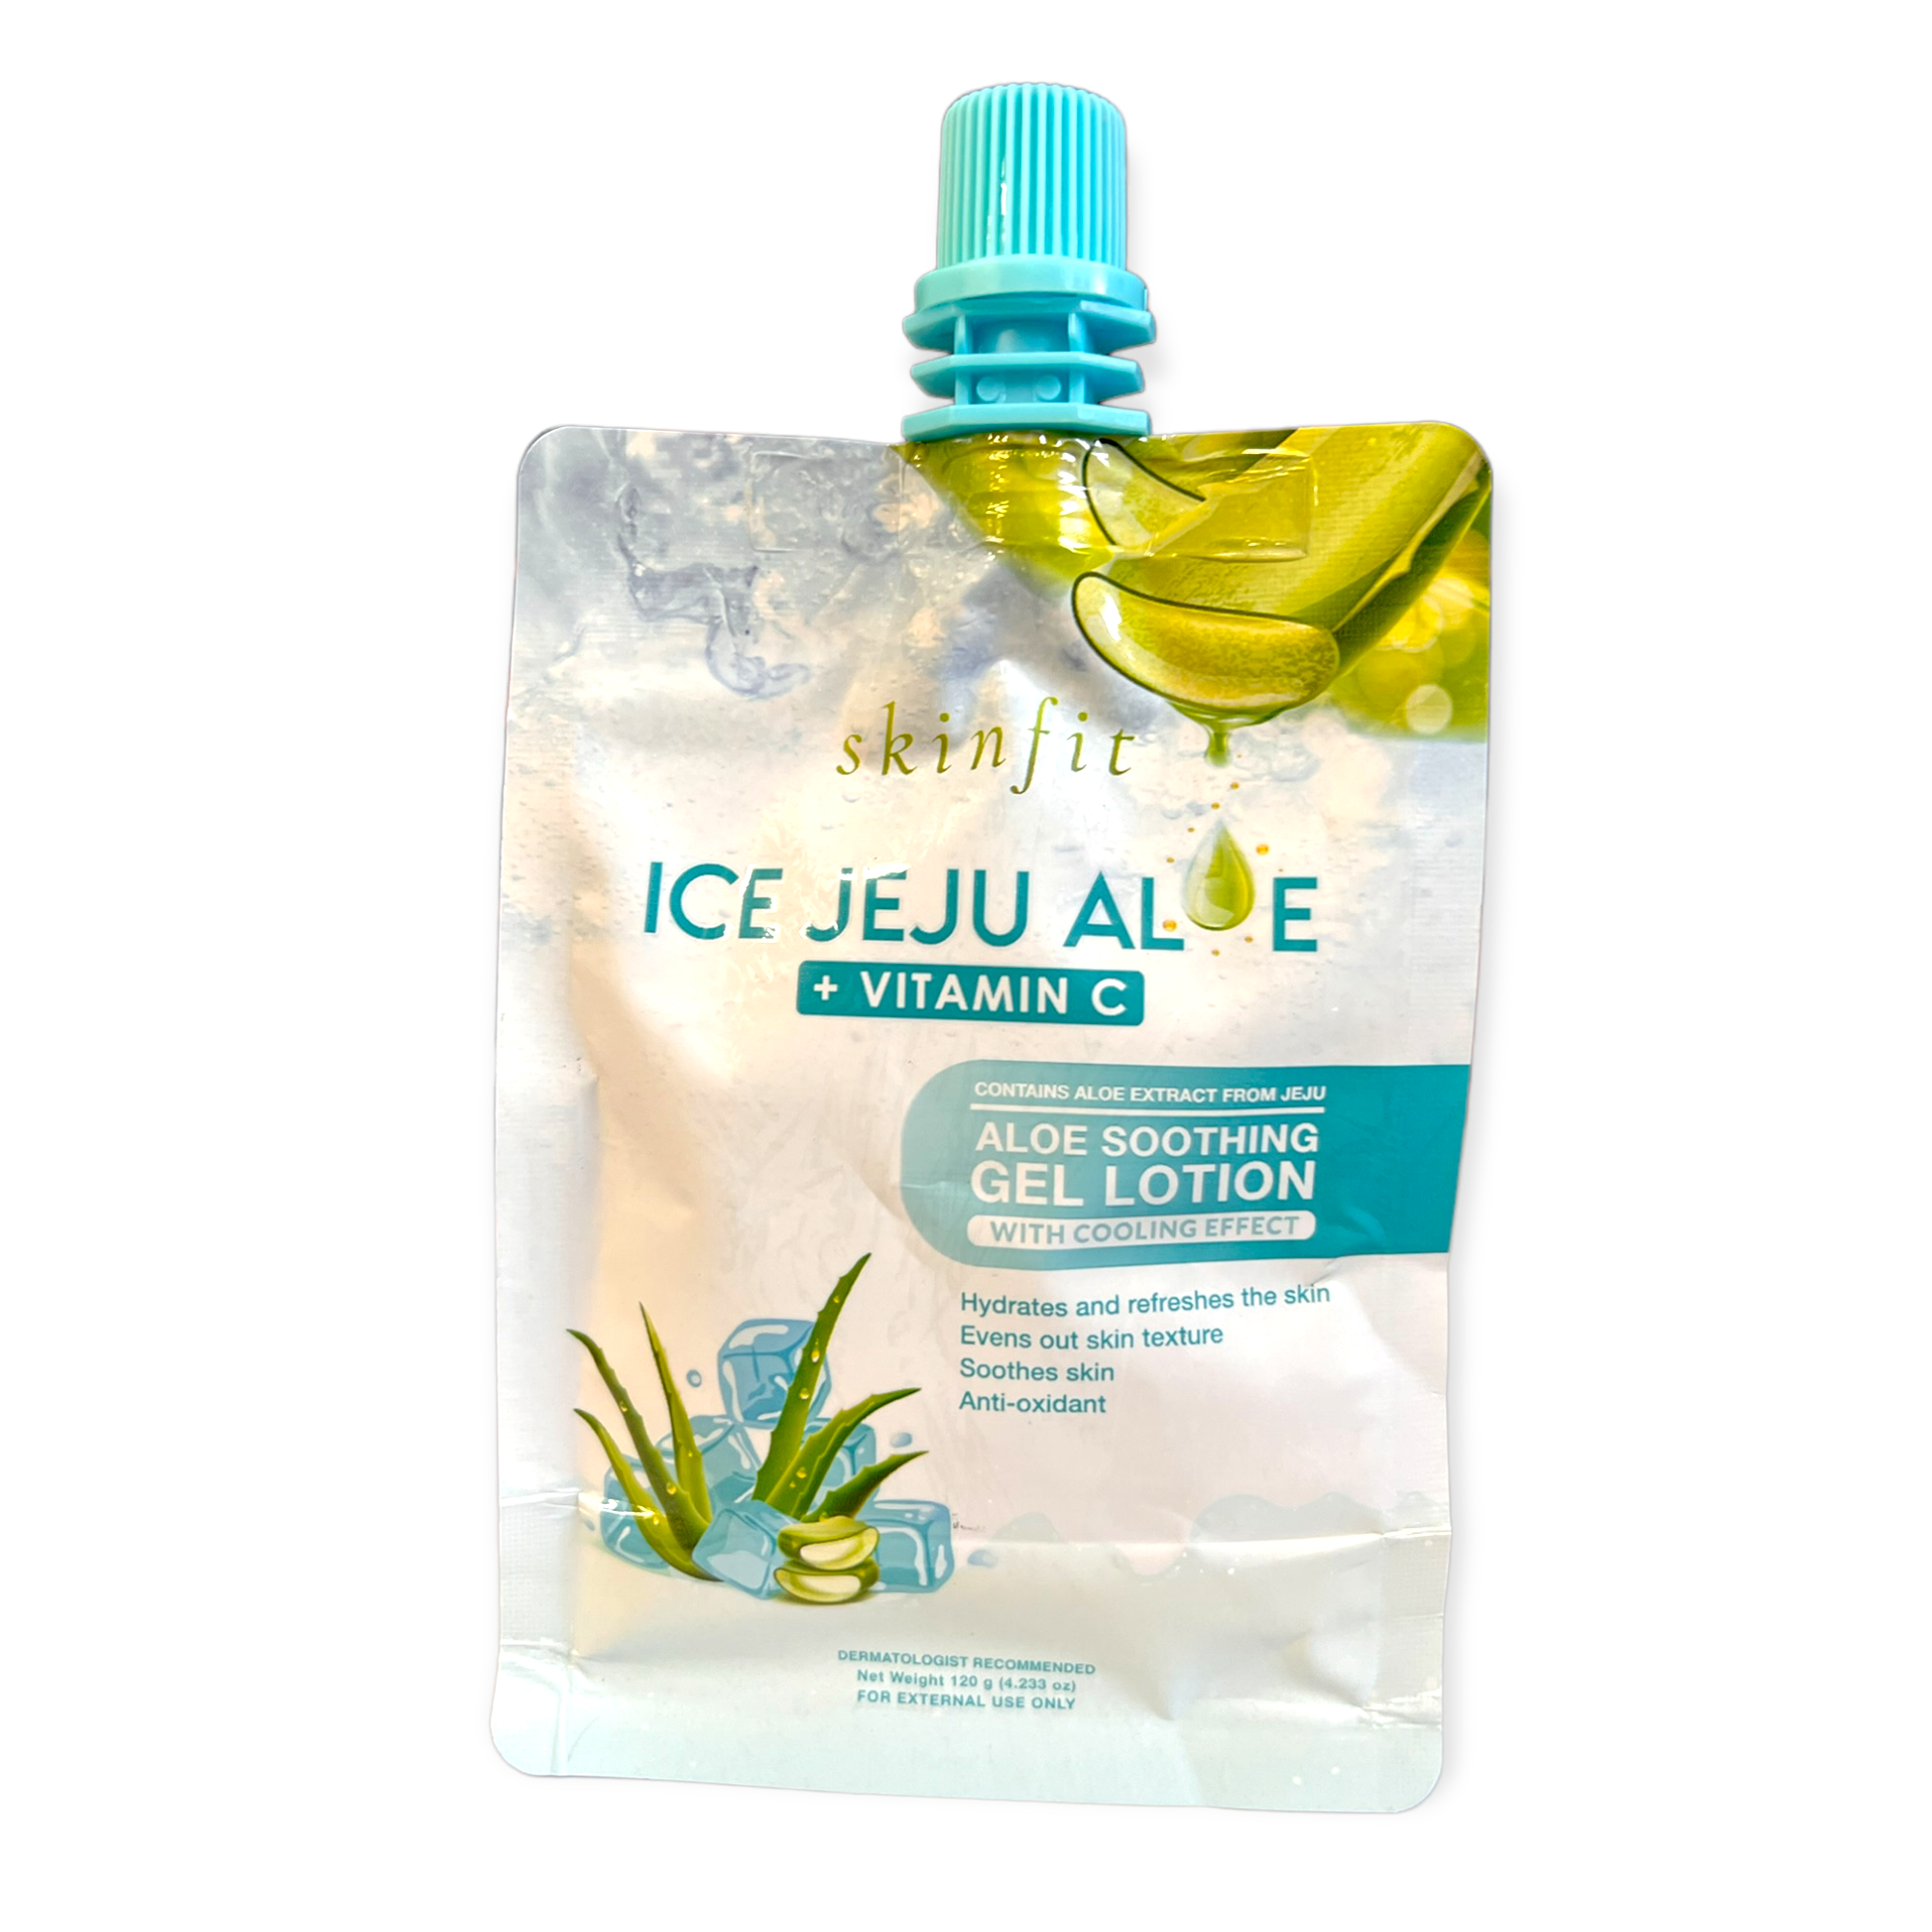 Brilliant Skin x Skin Fit Ice Jeju Aloe + Vitamin C 120g